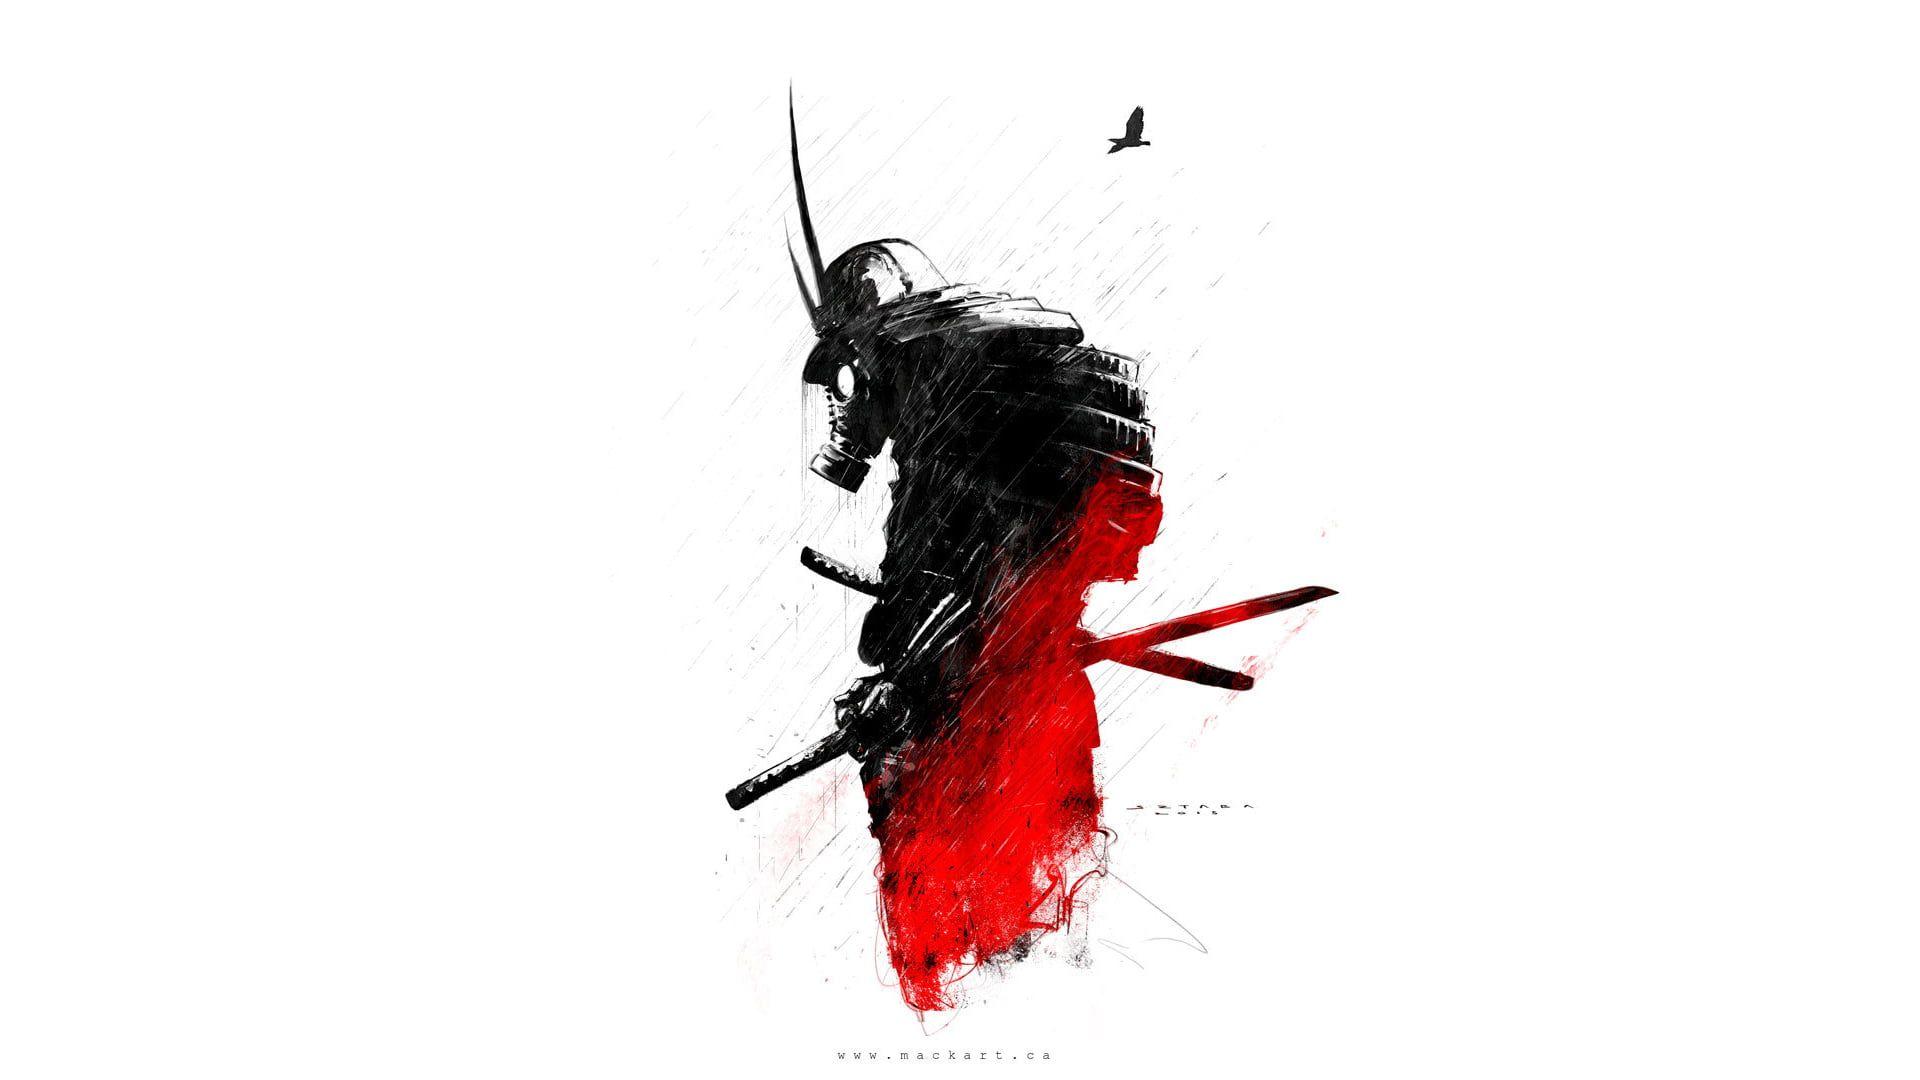 Black and White Samurai Wallpapers - Top Free Black and White Samurai